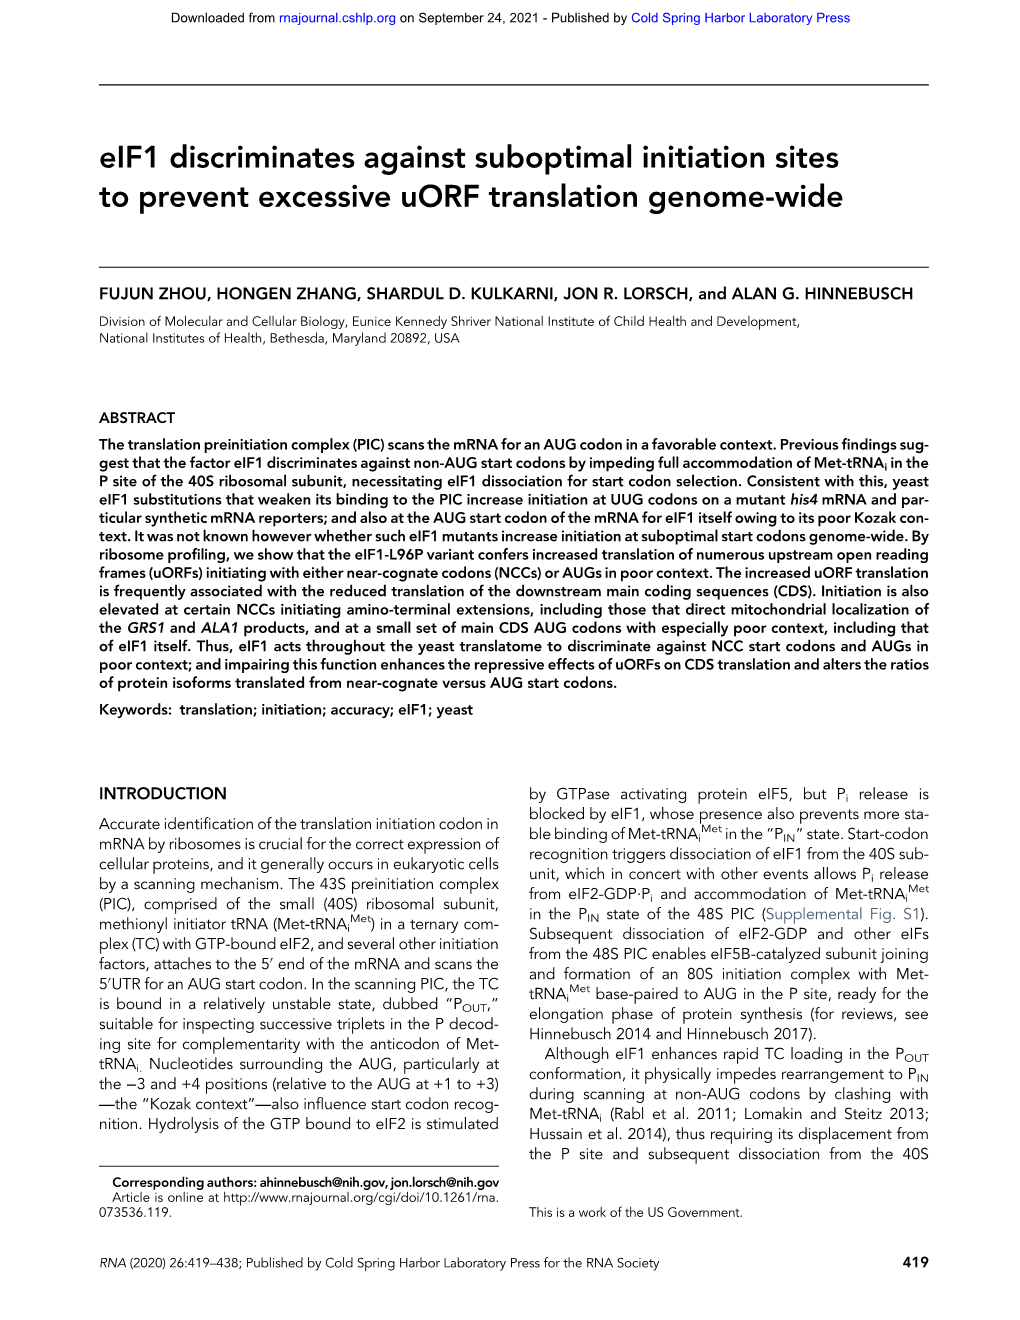 Eif1 Discriminates Against Suboptimal Initiation Sites to Prevent Excessive Uorf Translation Genome-Wide